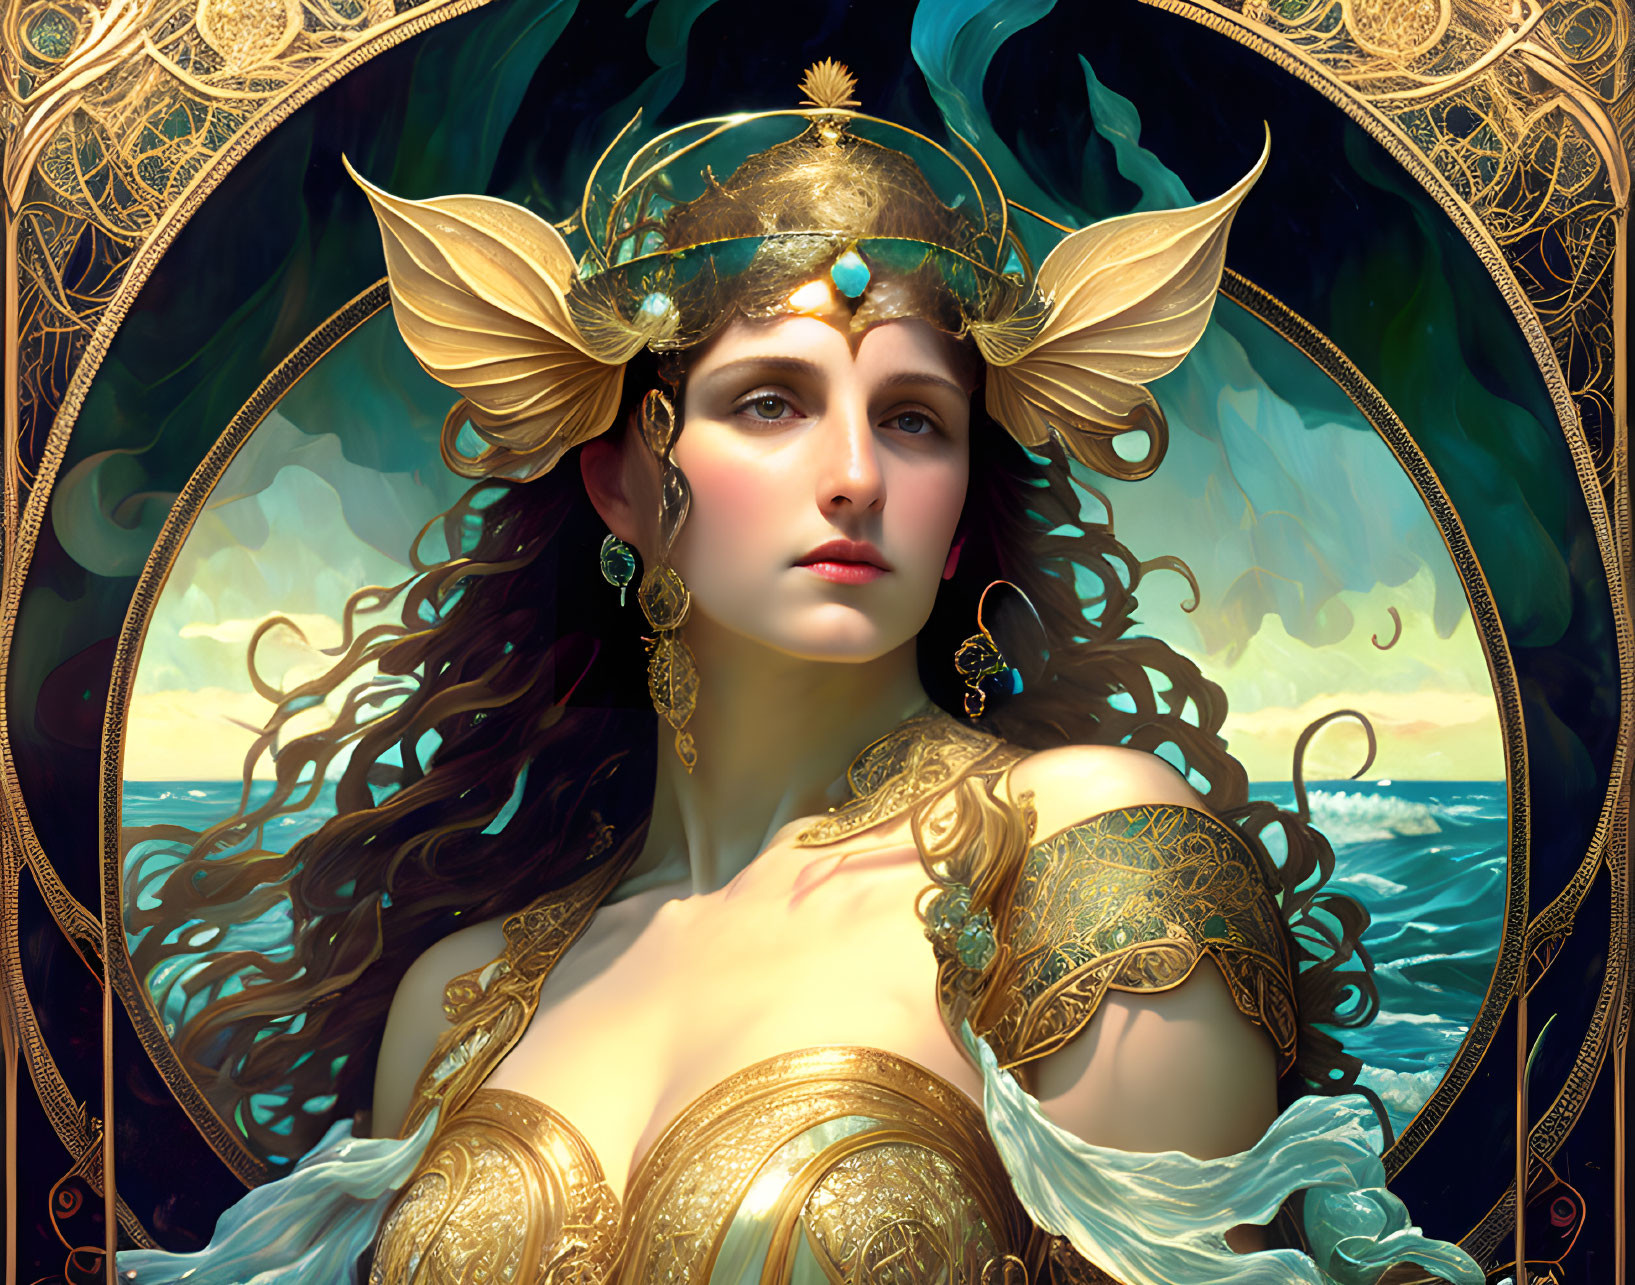 Mighty Aphrodite and the Calm Sea